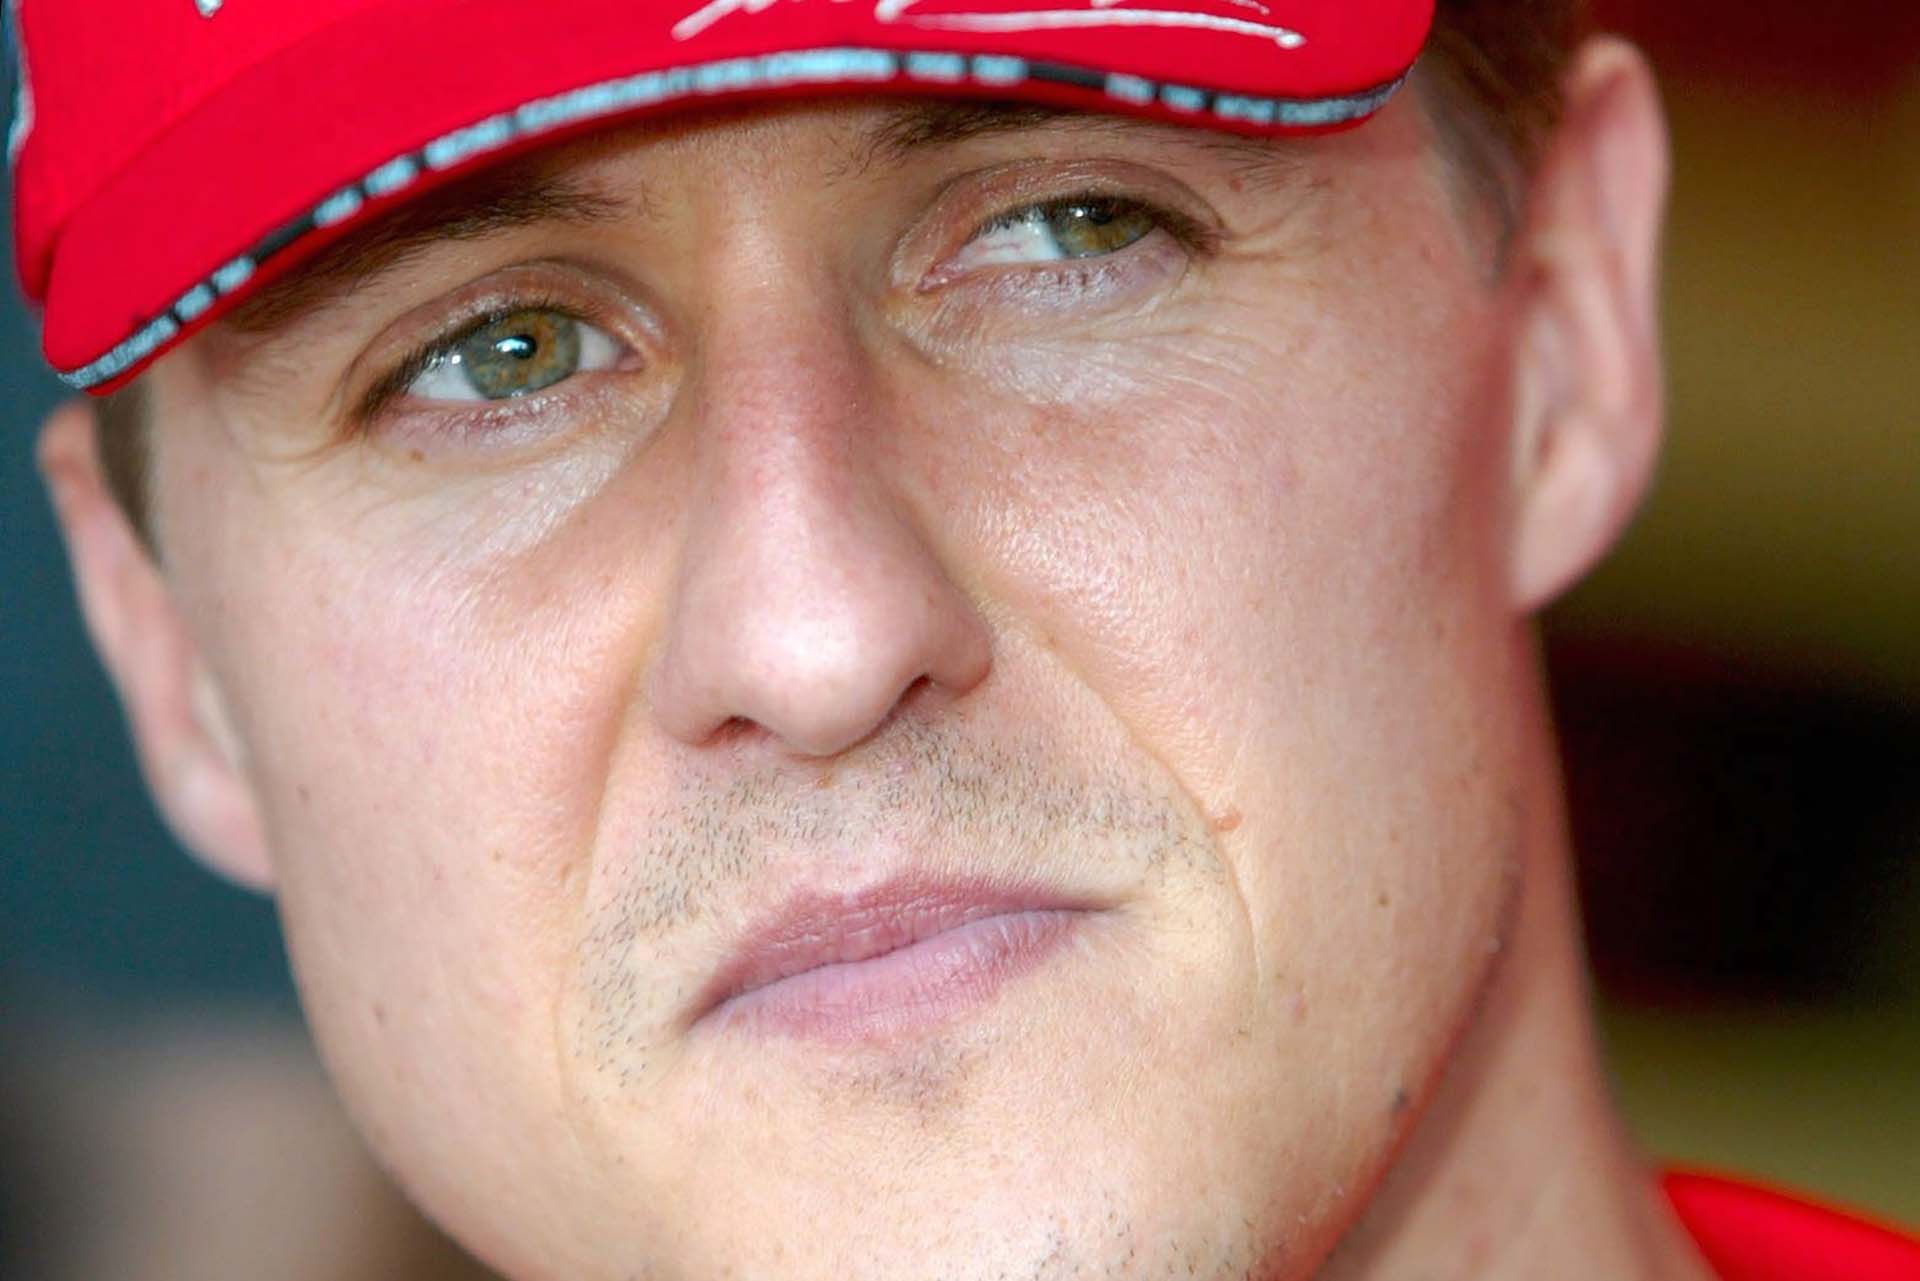 Michael Schumacher's tough fight